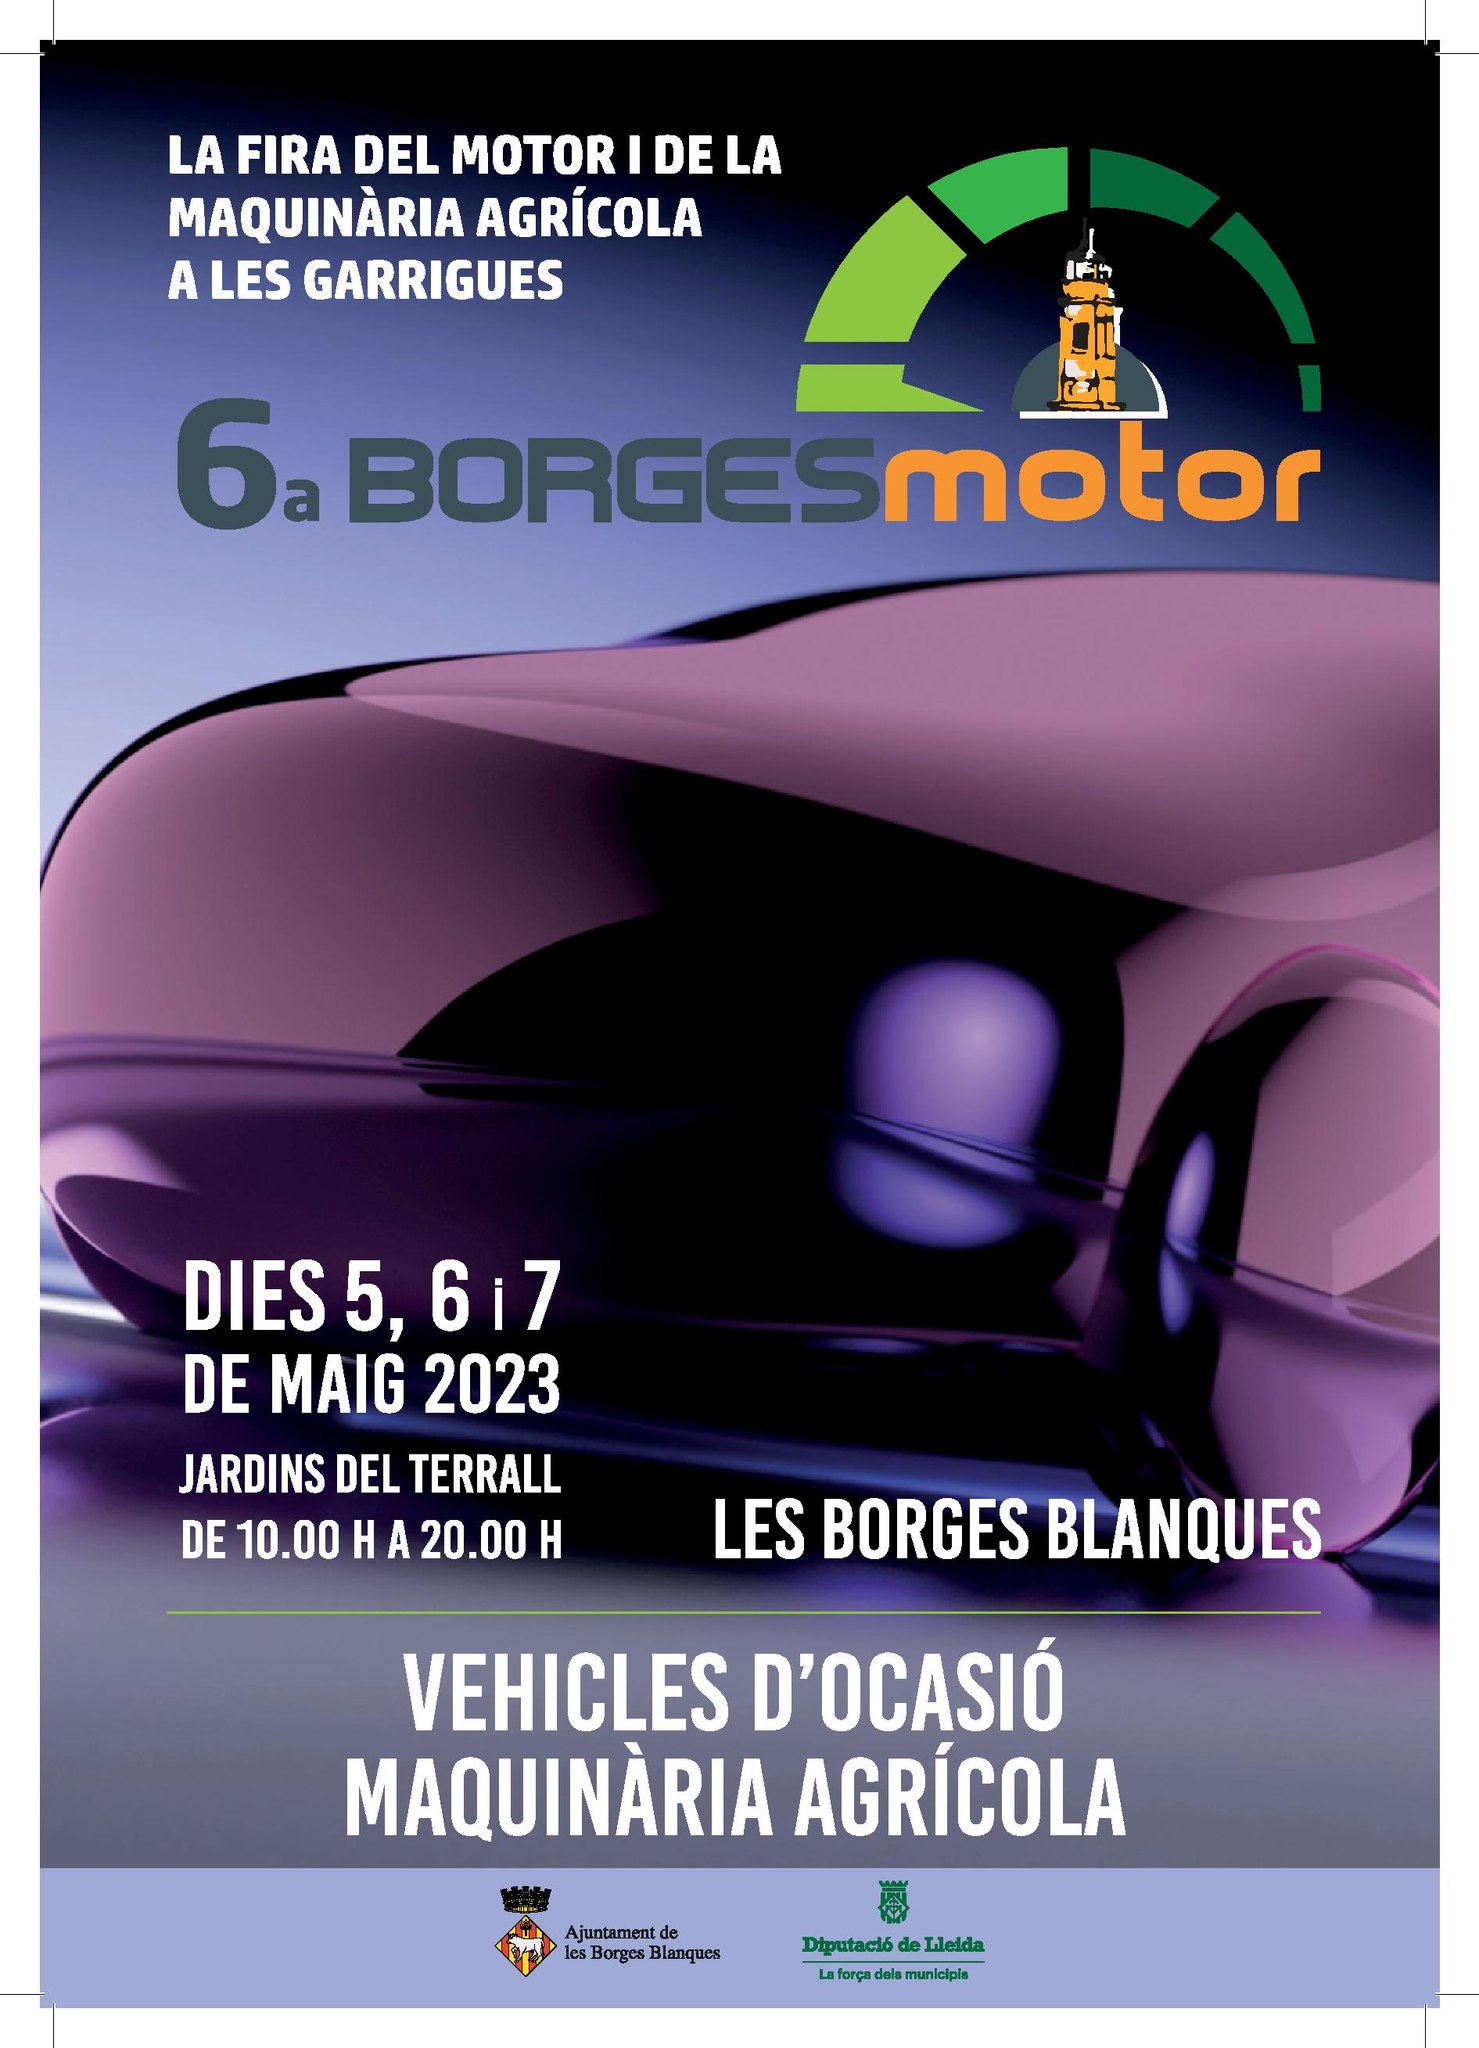 Cartell del 6è Borges Motor